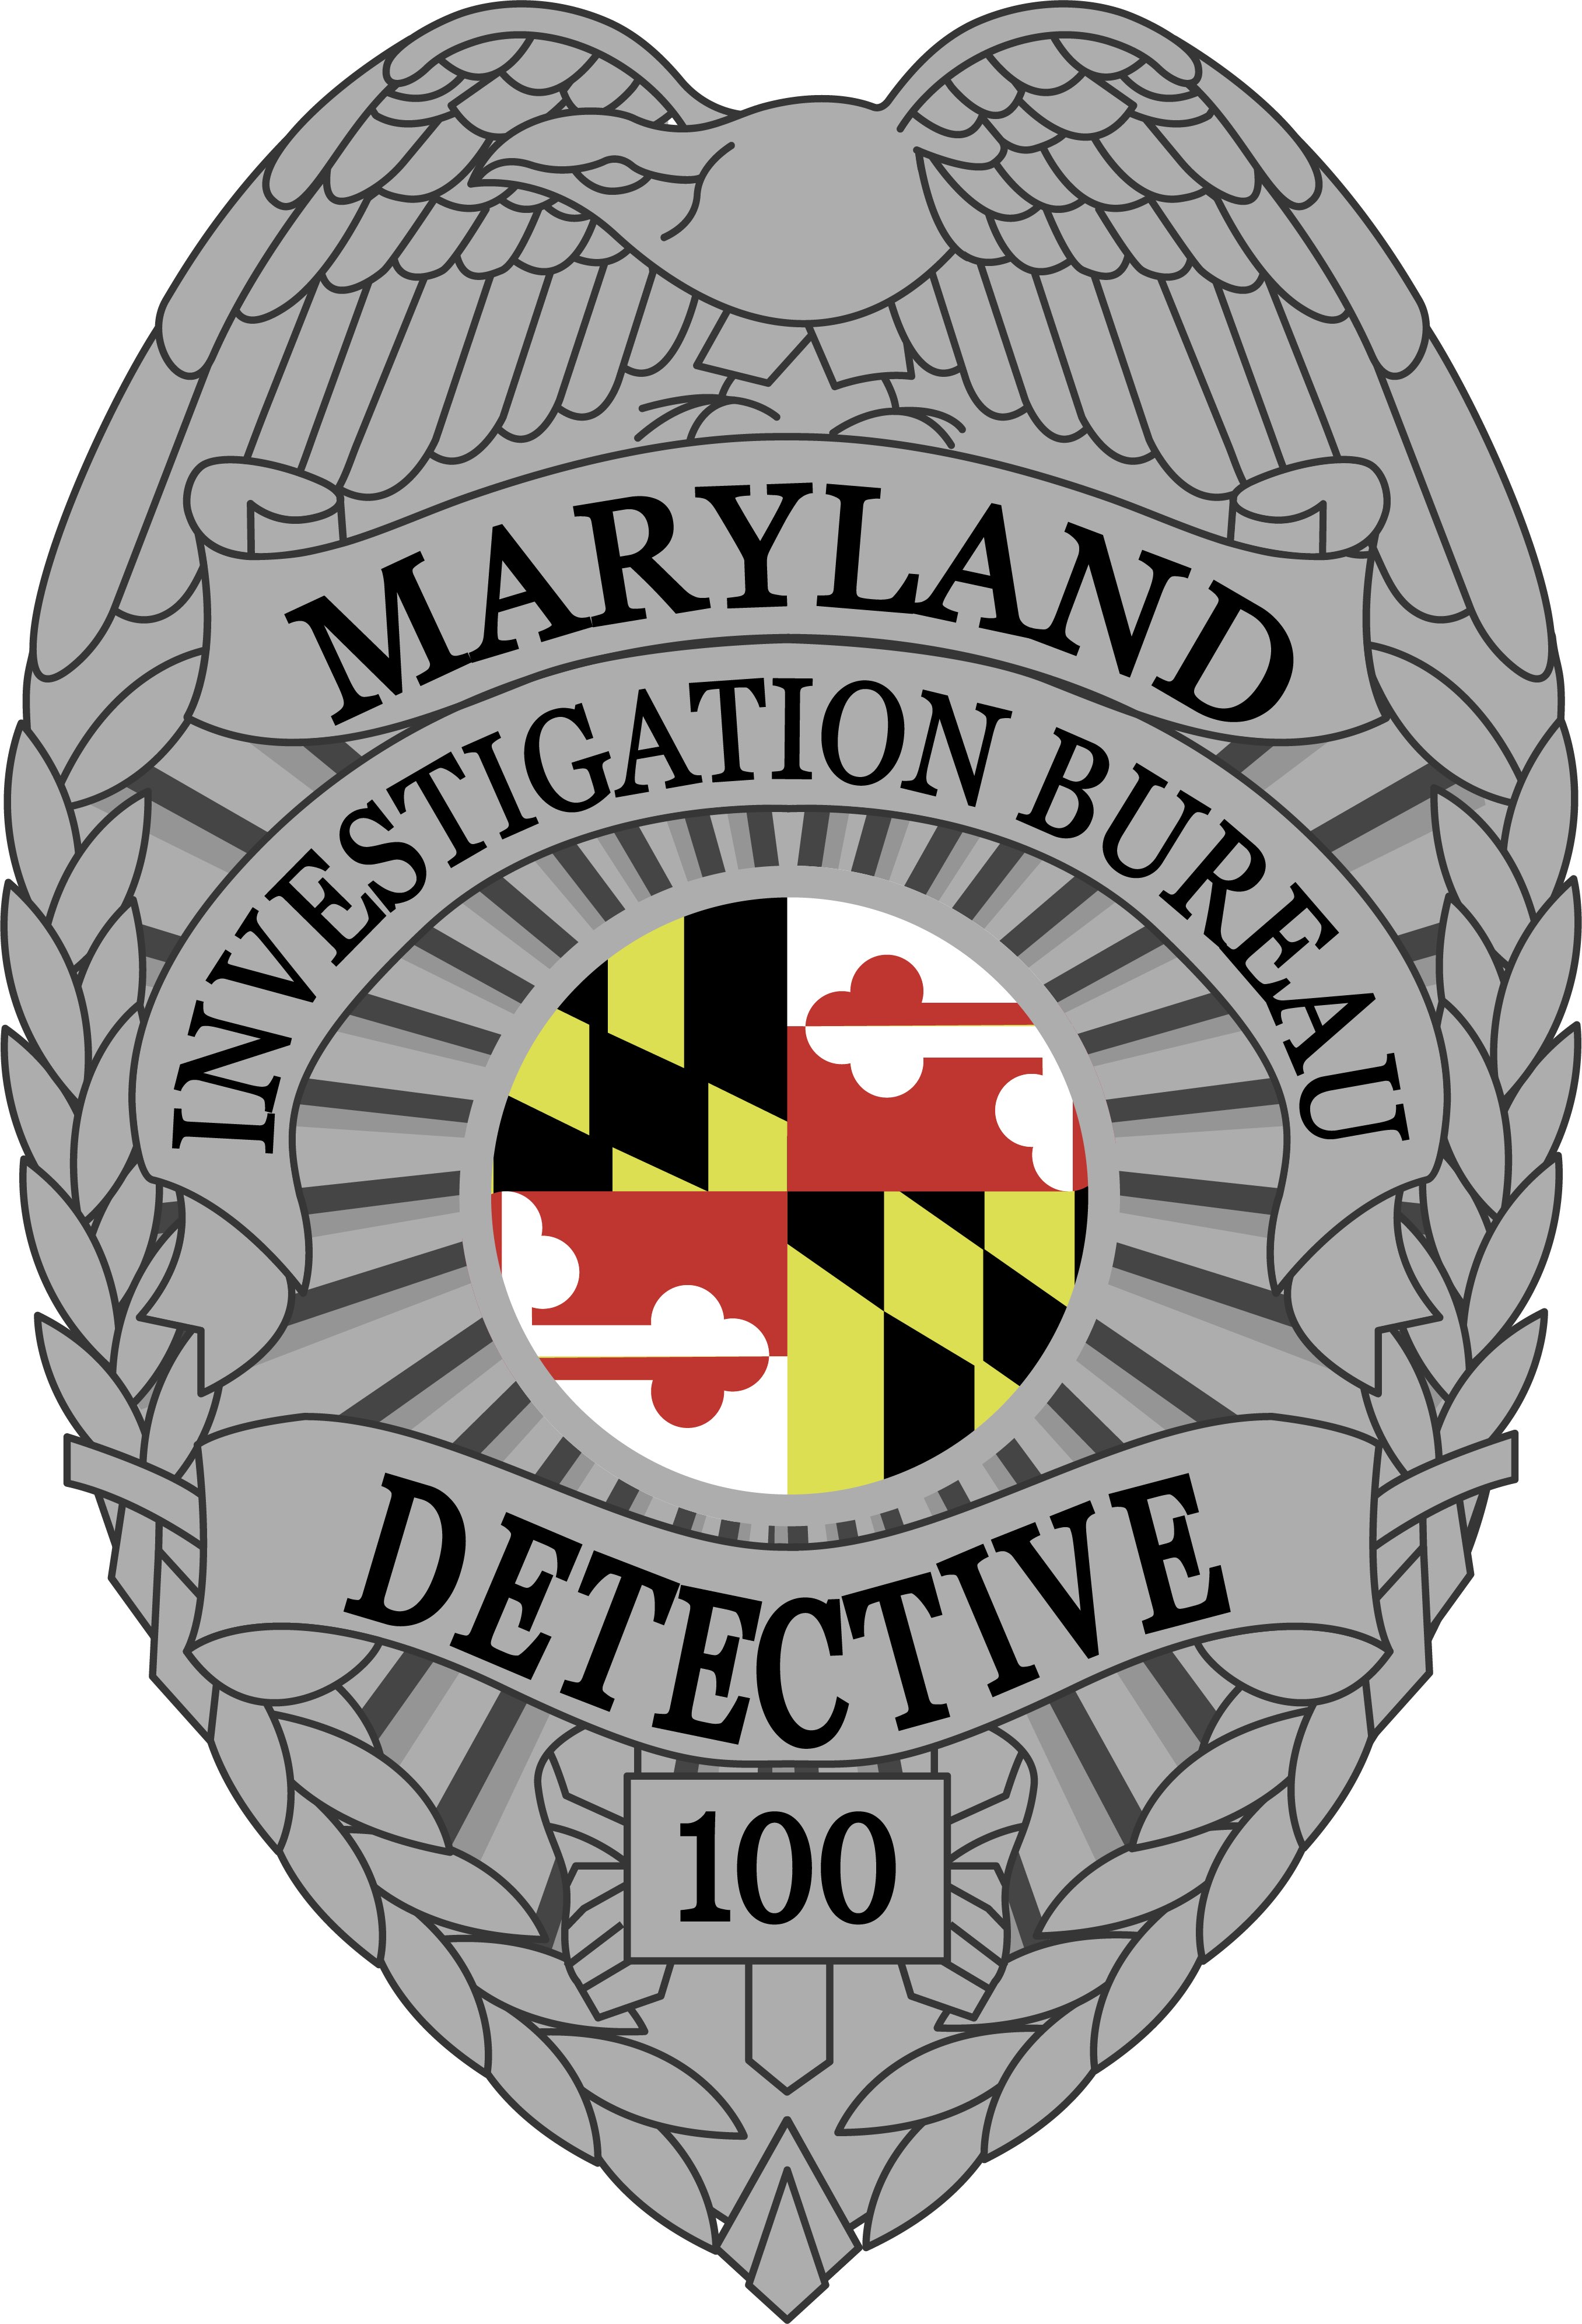 Maryland Investigation Bureau Badge